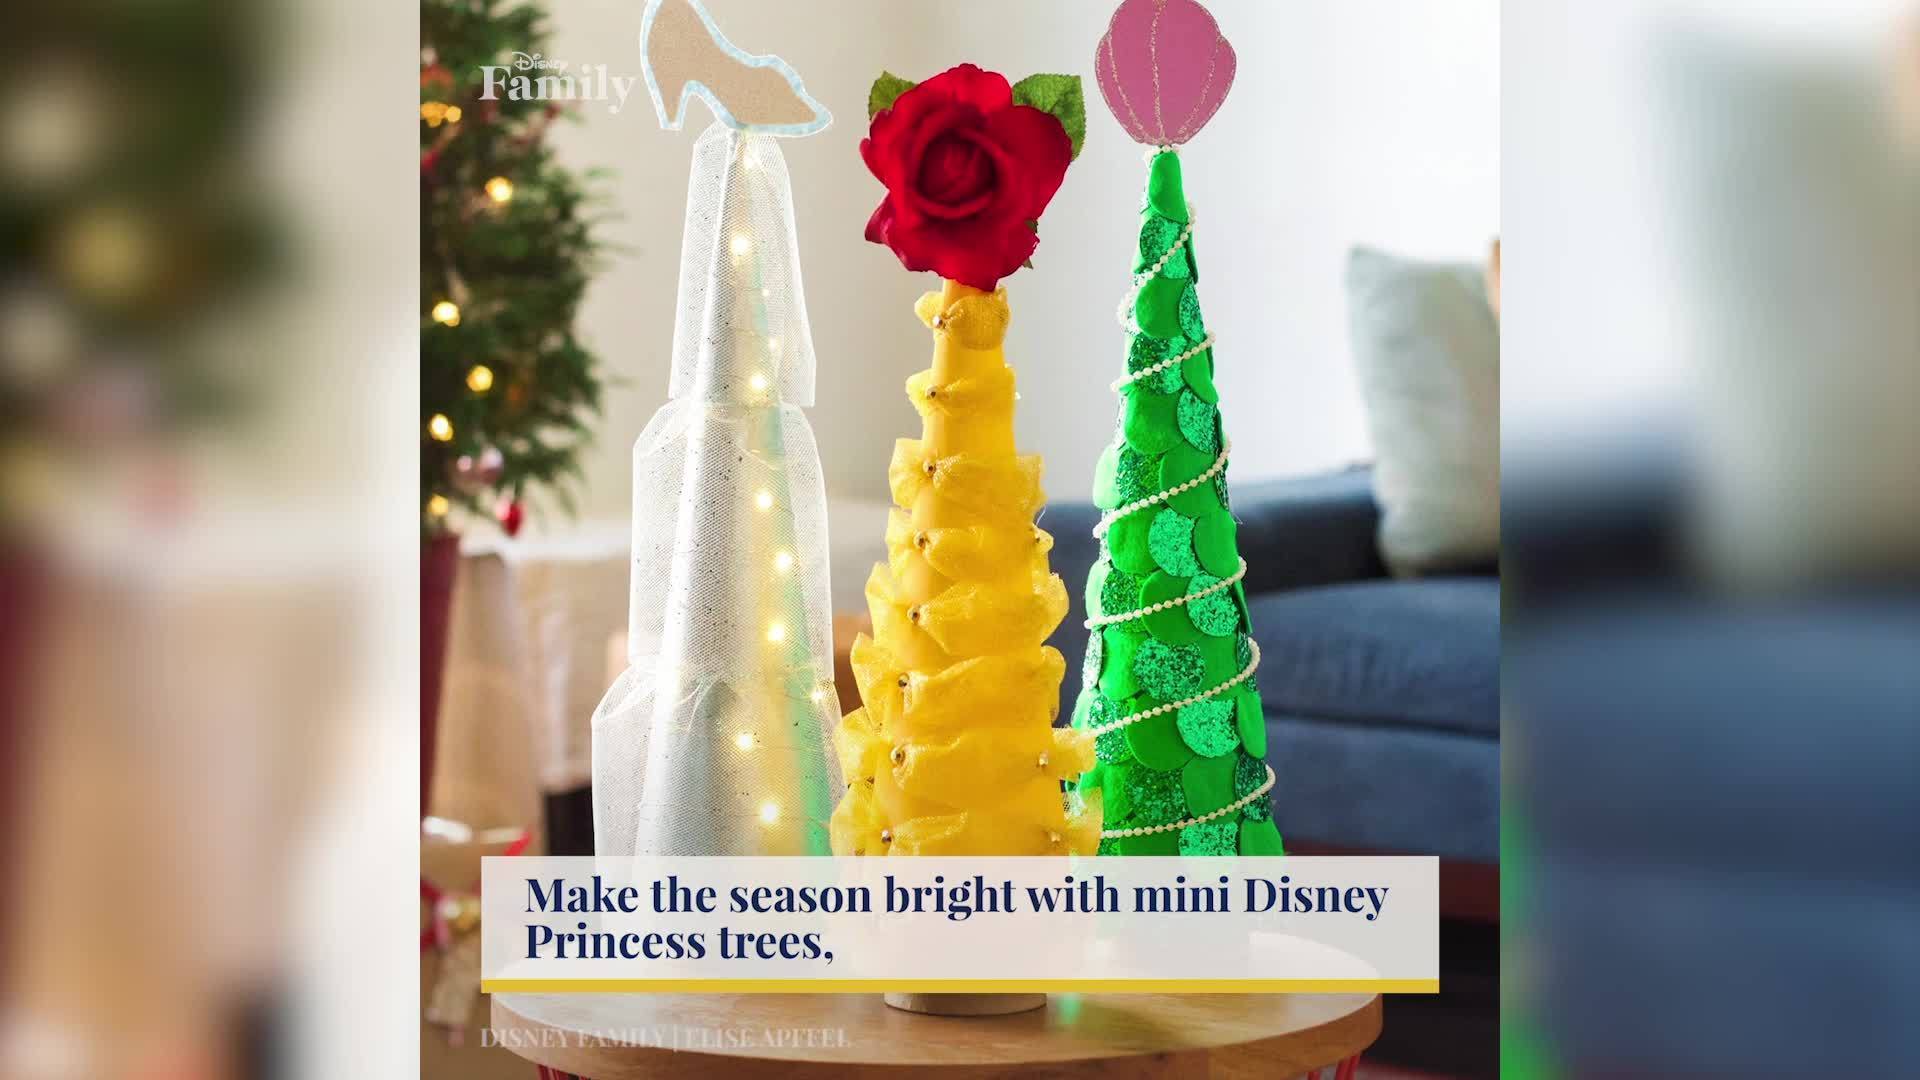 Mini Trees for Your Little Princess | Disney Family